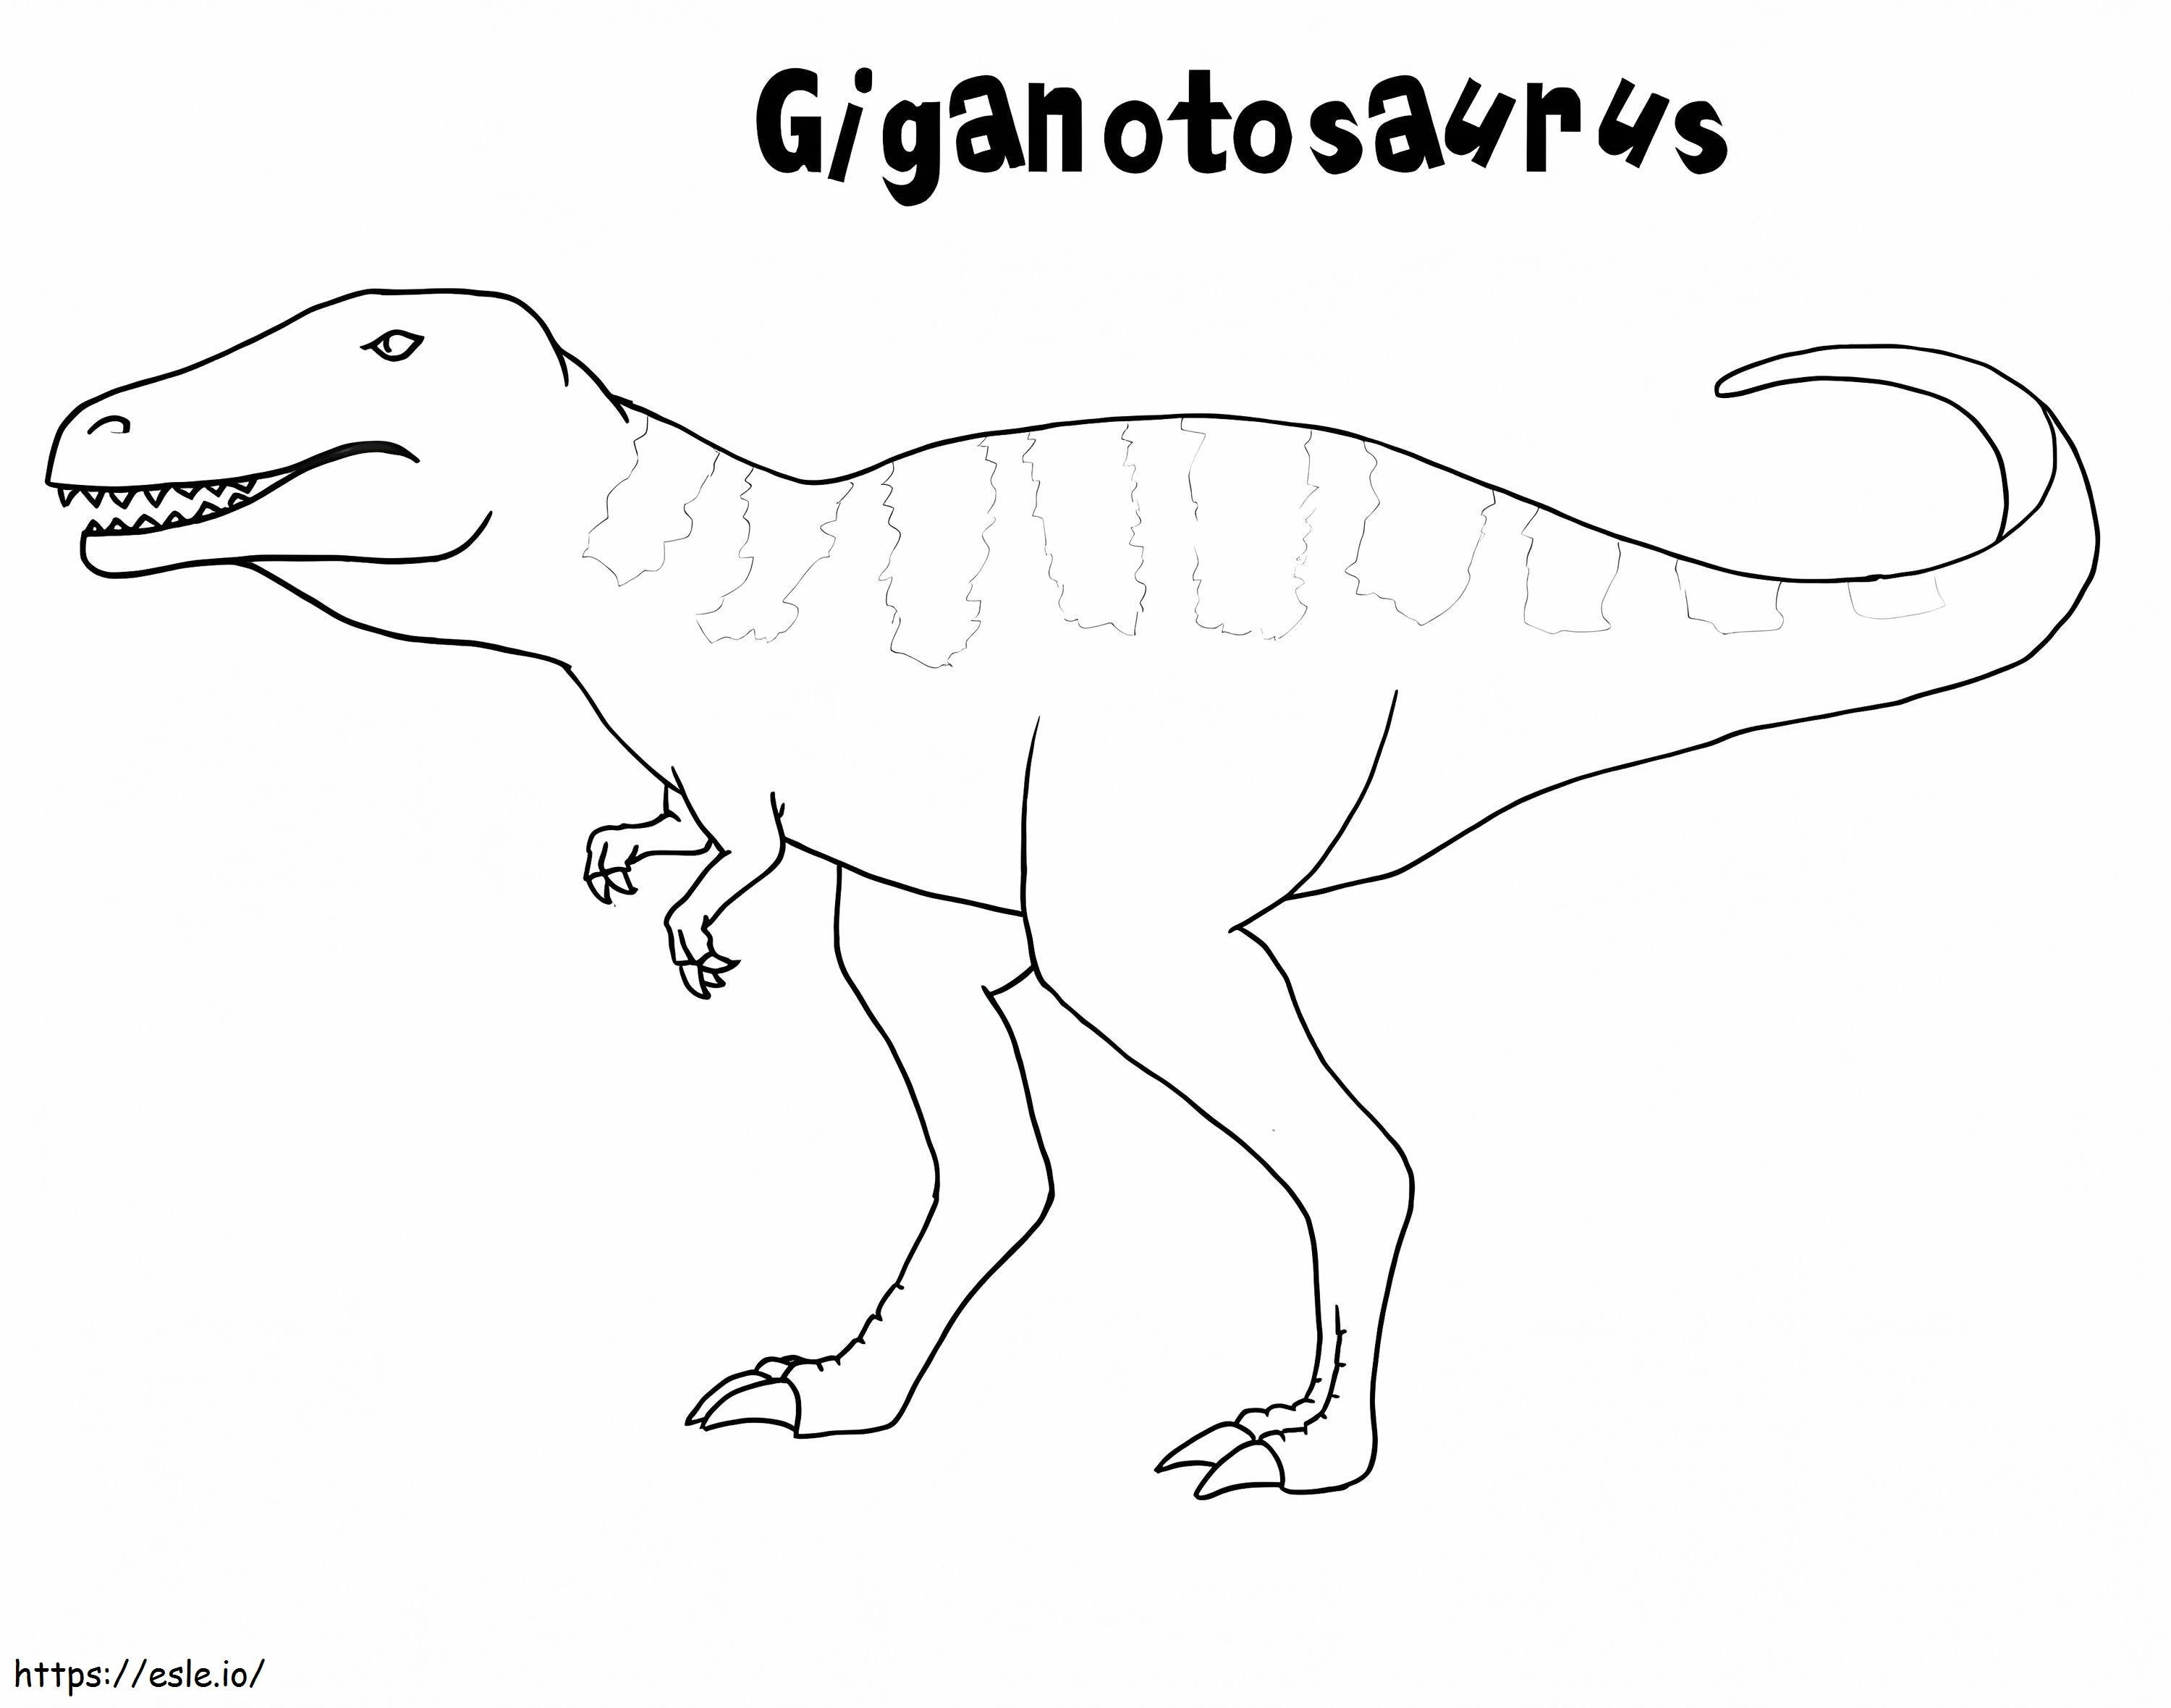 Coloriage Giganotosaure facile à imprimer dessin